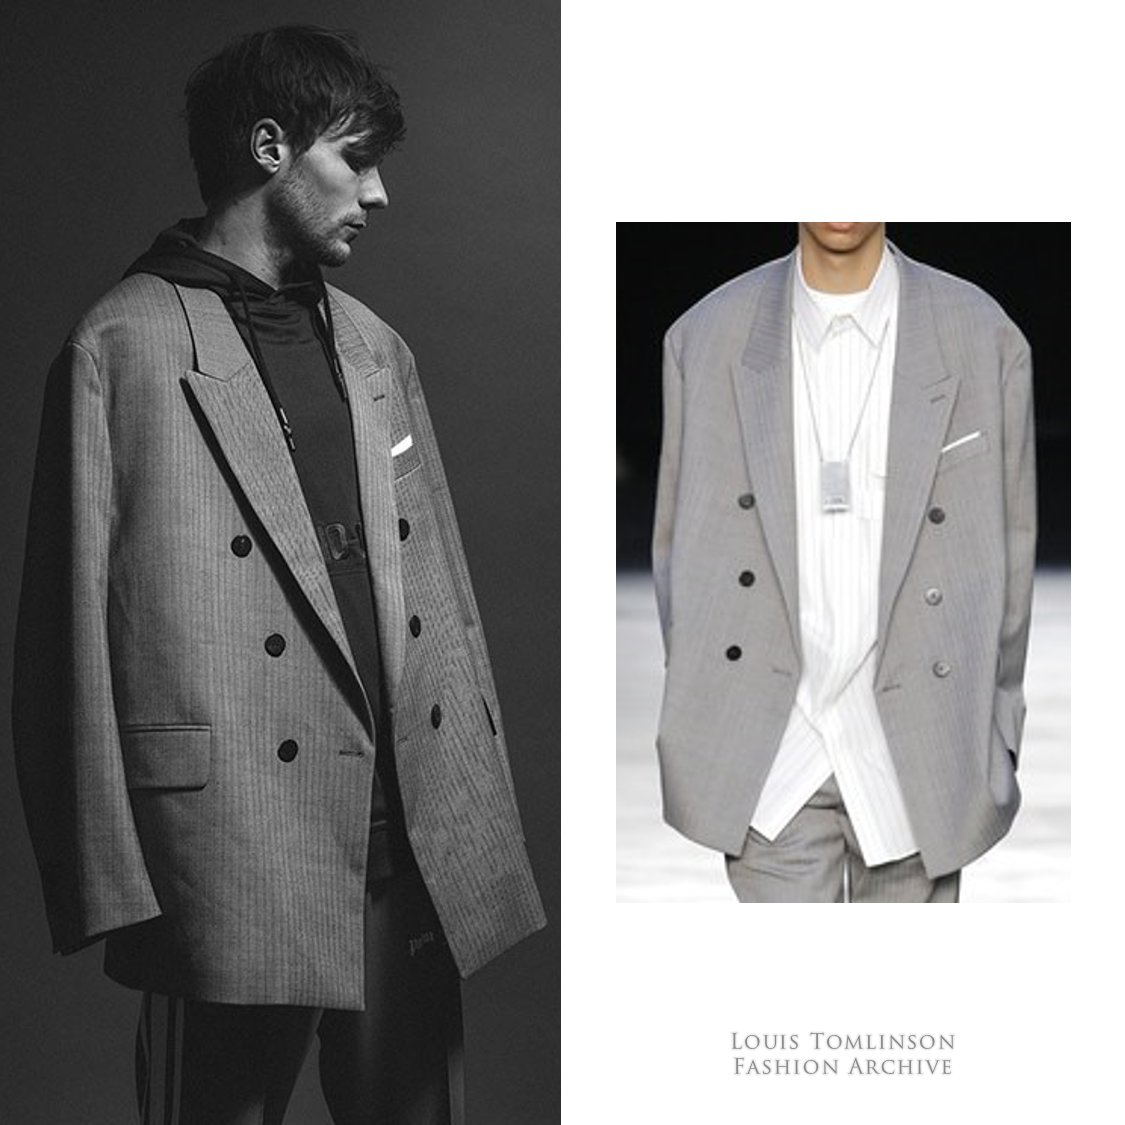 Louis Tomlinson Fashion Archive on X: 07/14/18